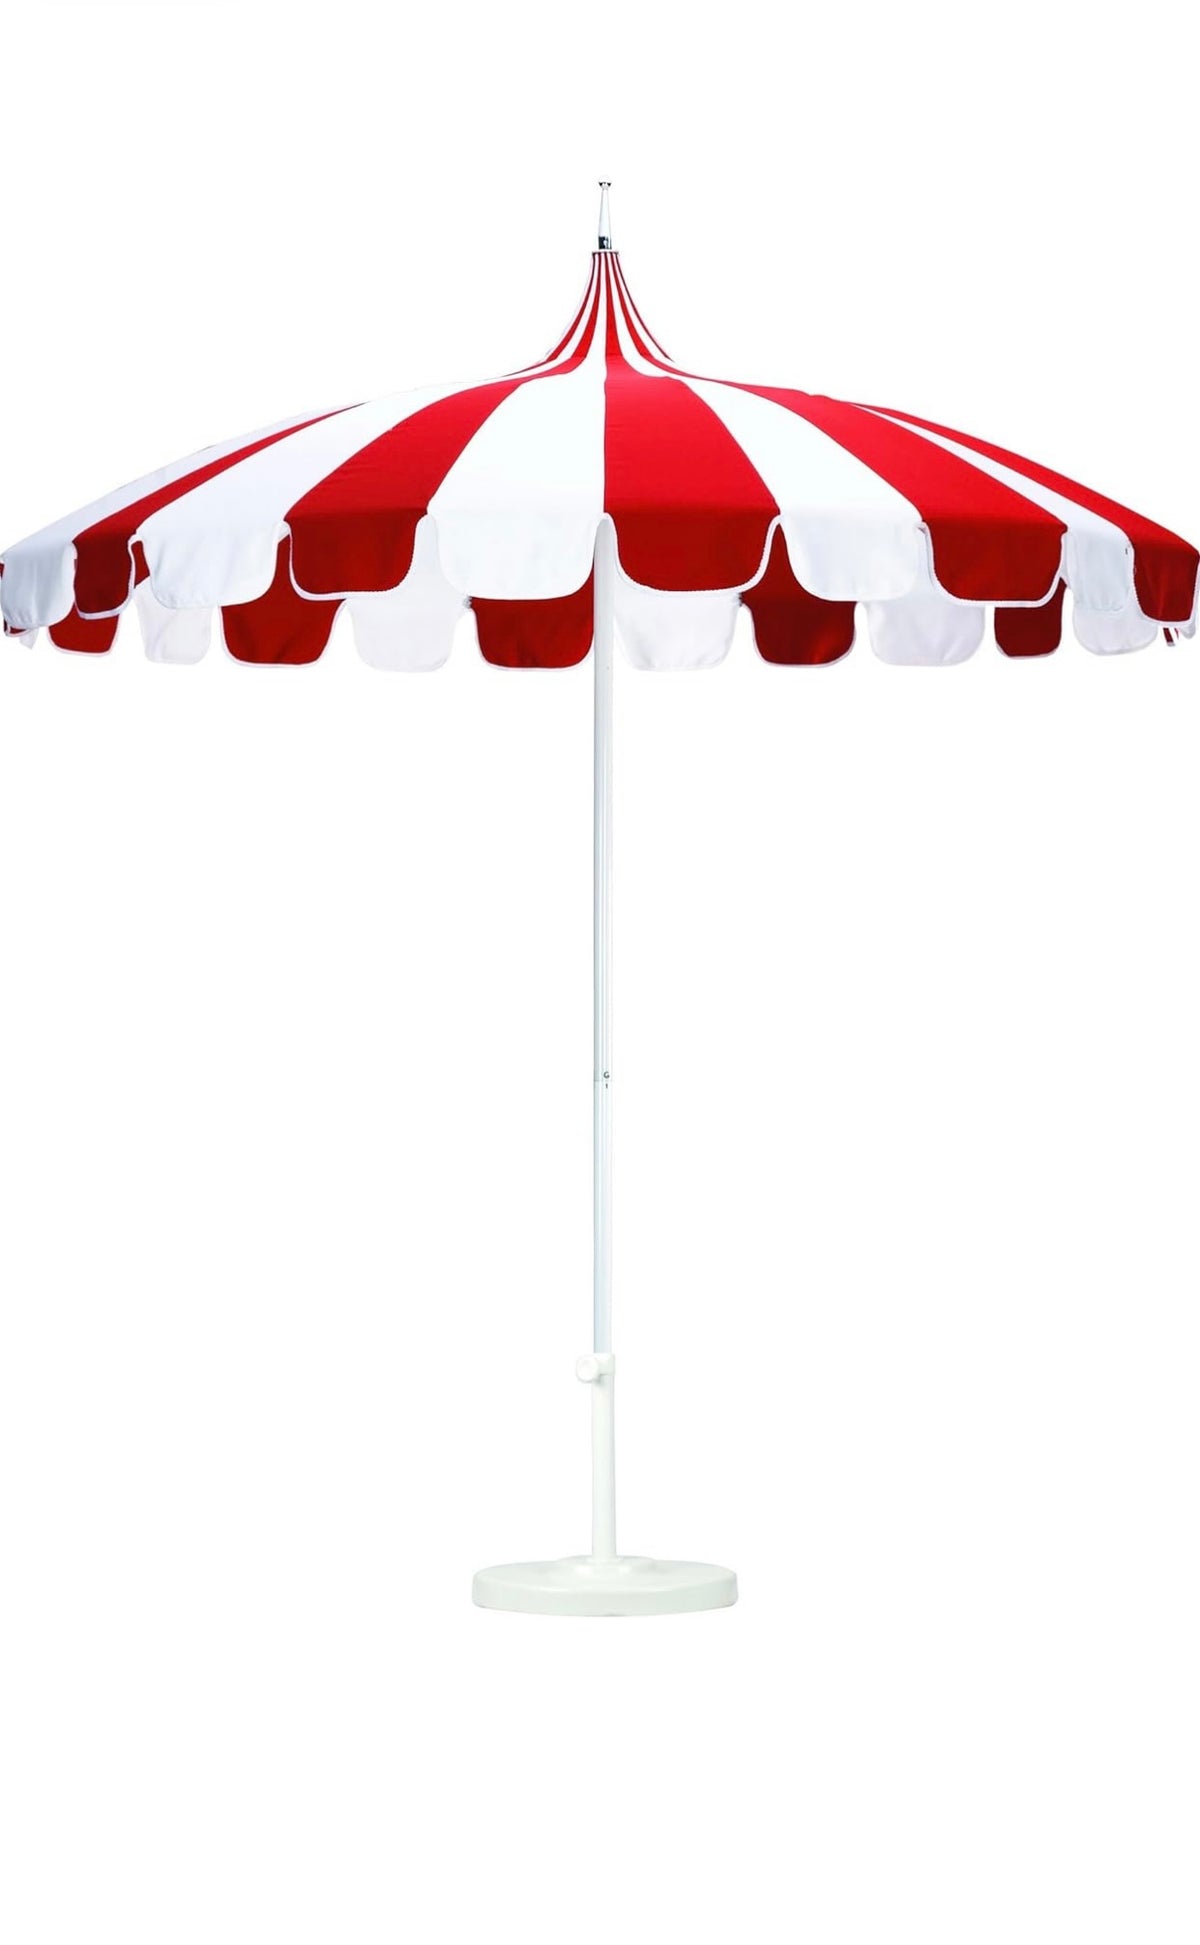 Red & White Umbrella With White Base